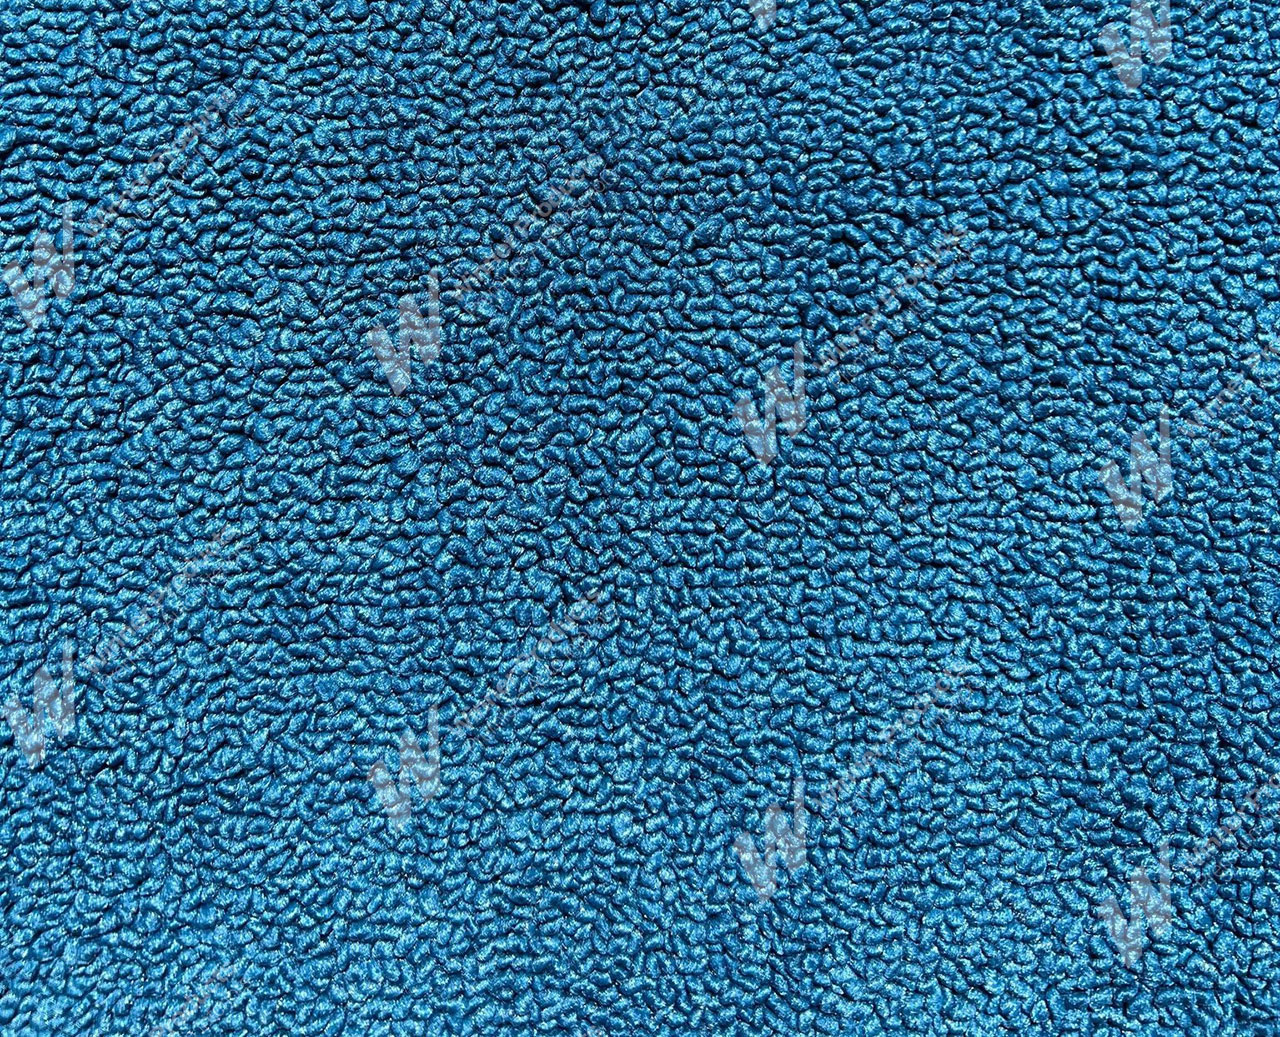 Holden Premier HZ Premier Wagon 23V Light Blue Carpet (Image 1 of 1)